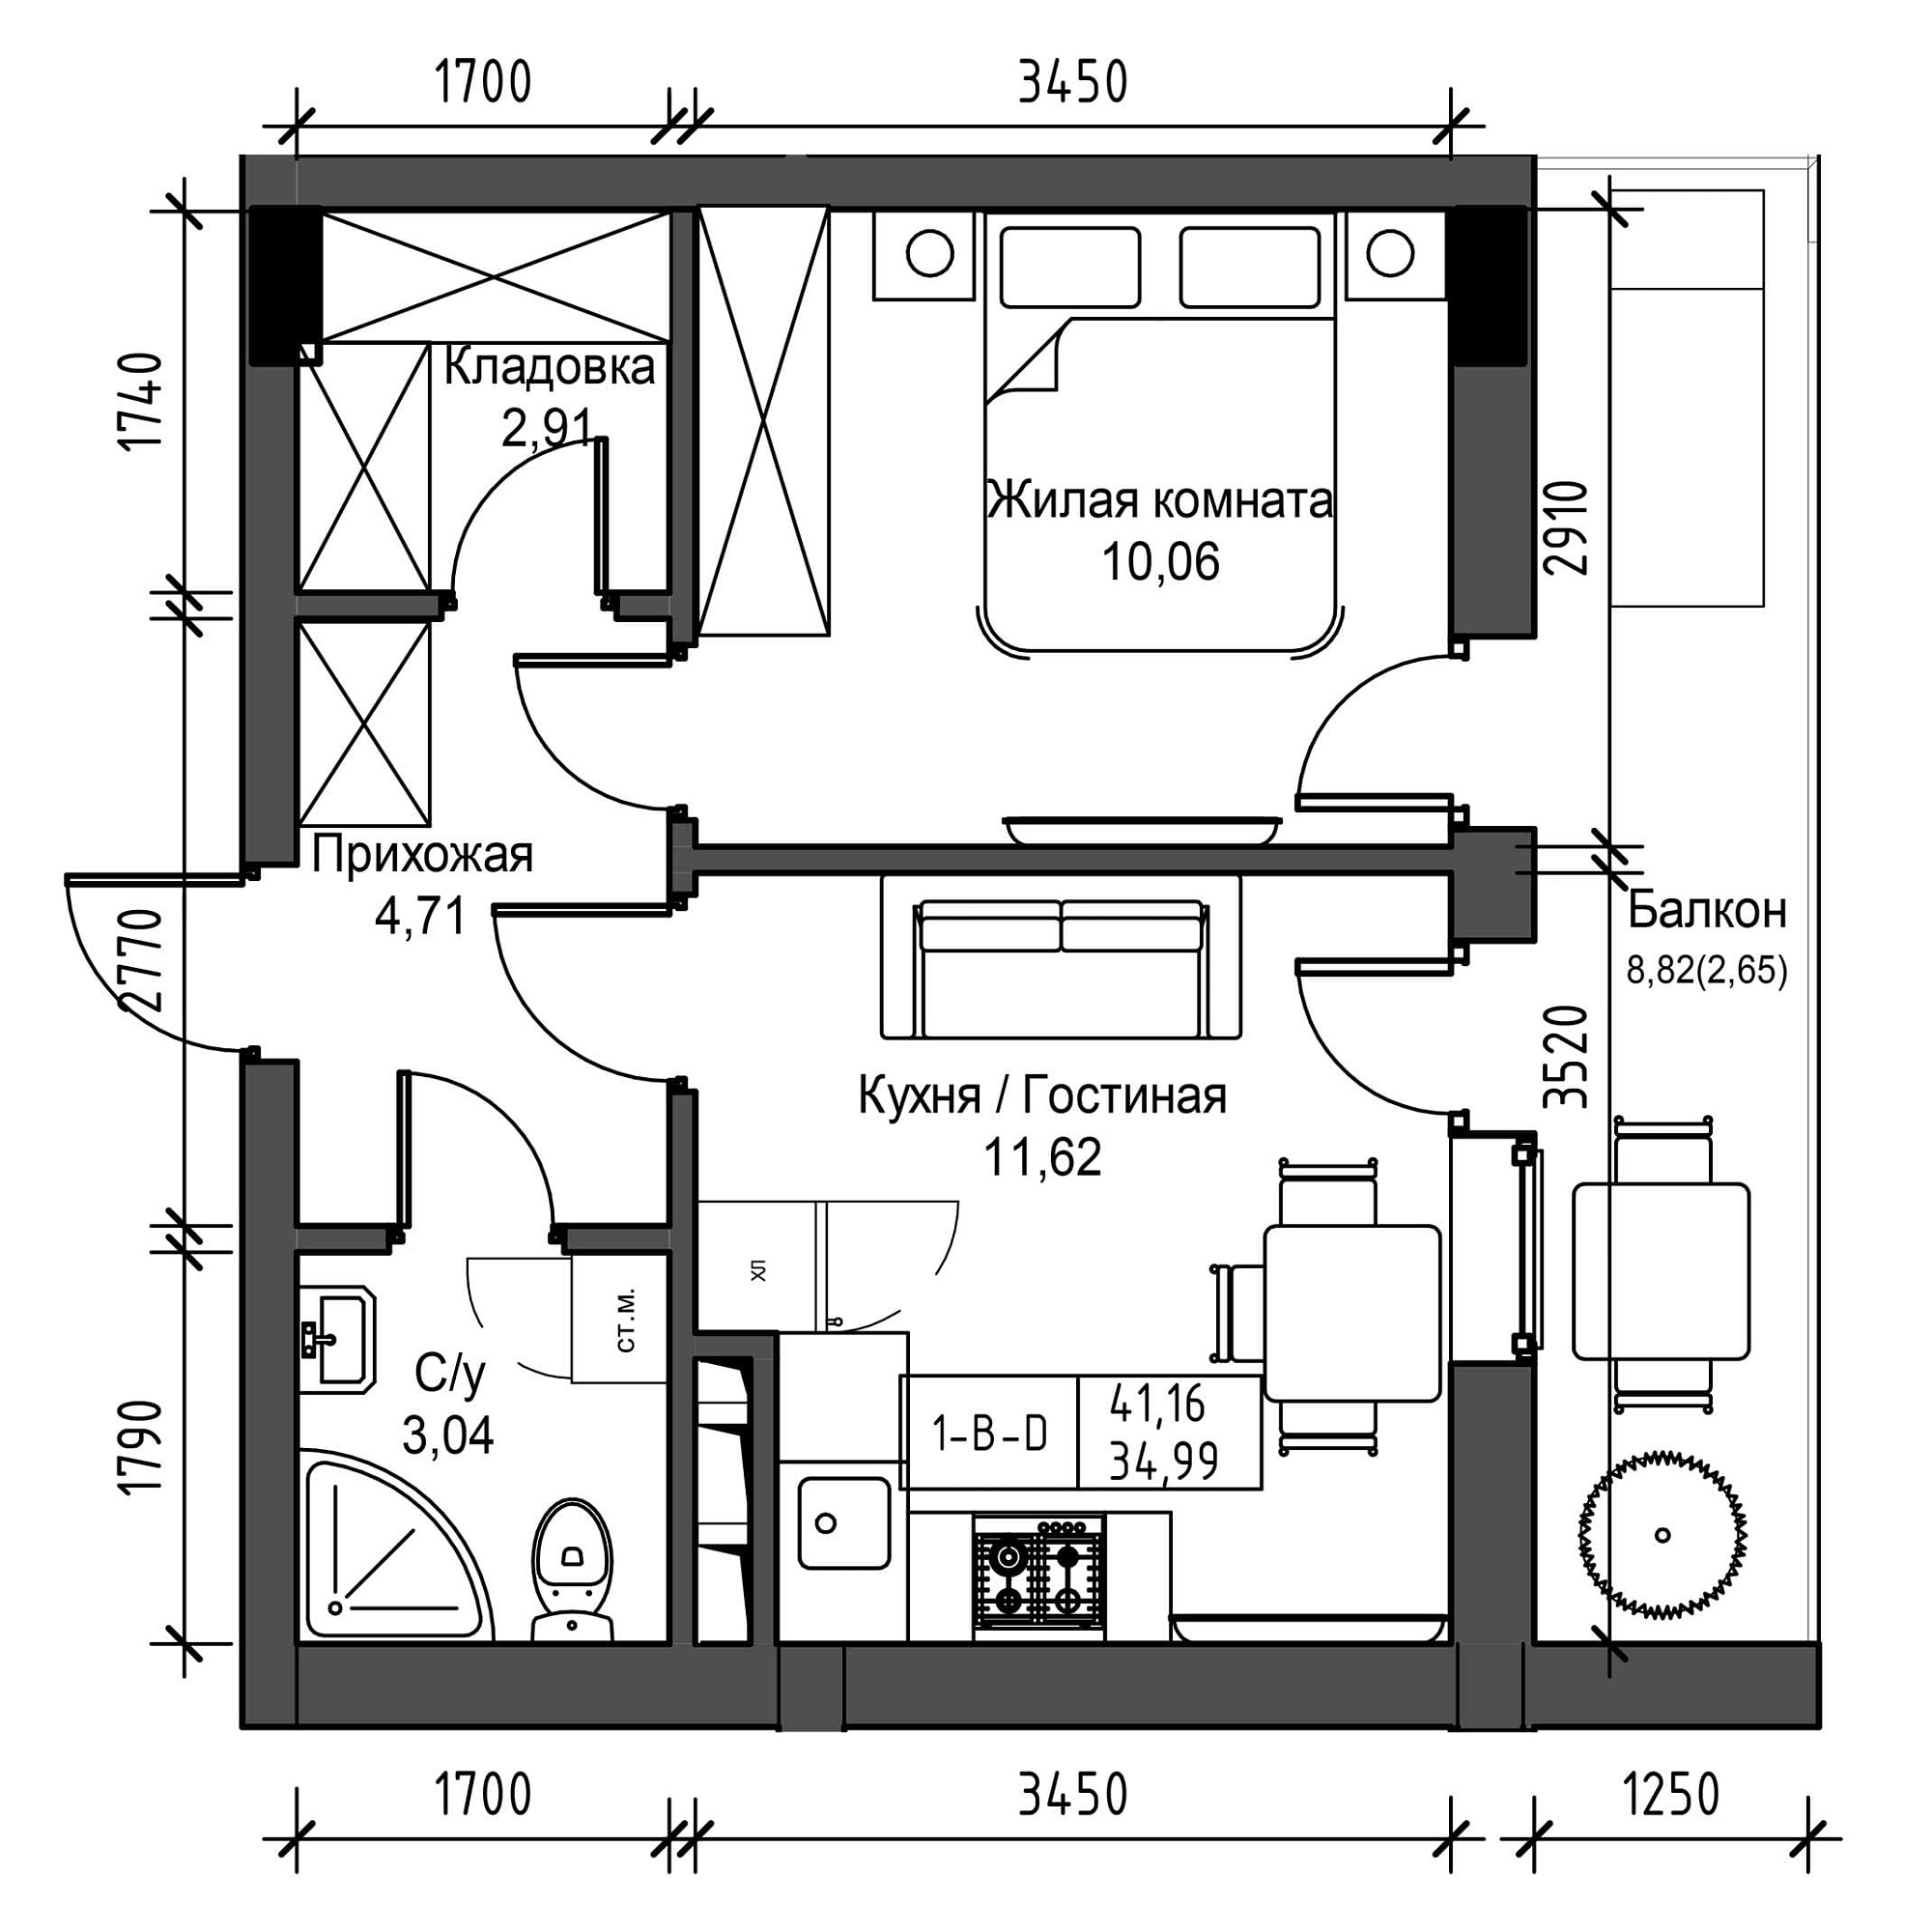 Planning 1-rm flats area 34.99m2, UM-001-05/0024.